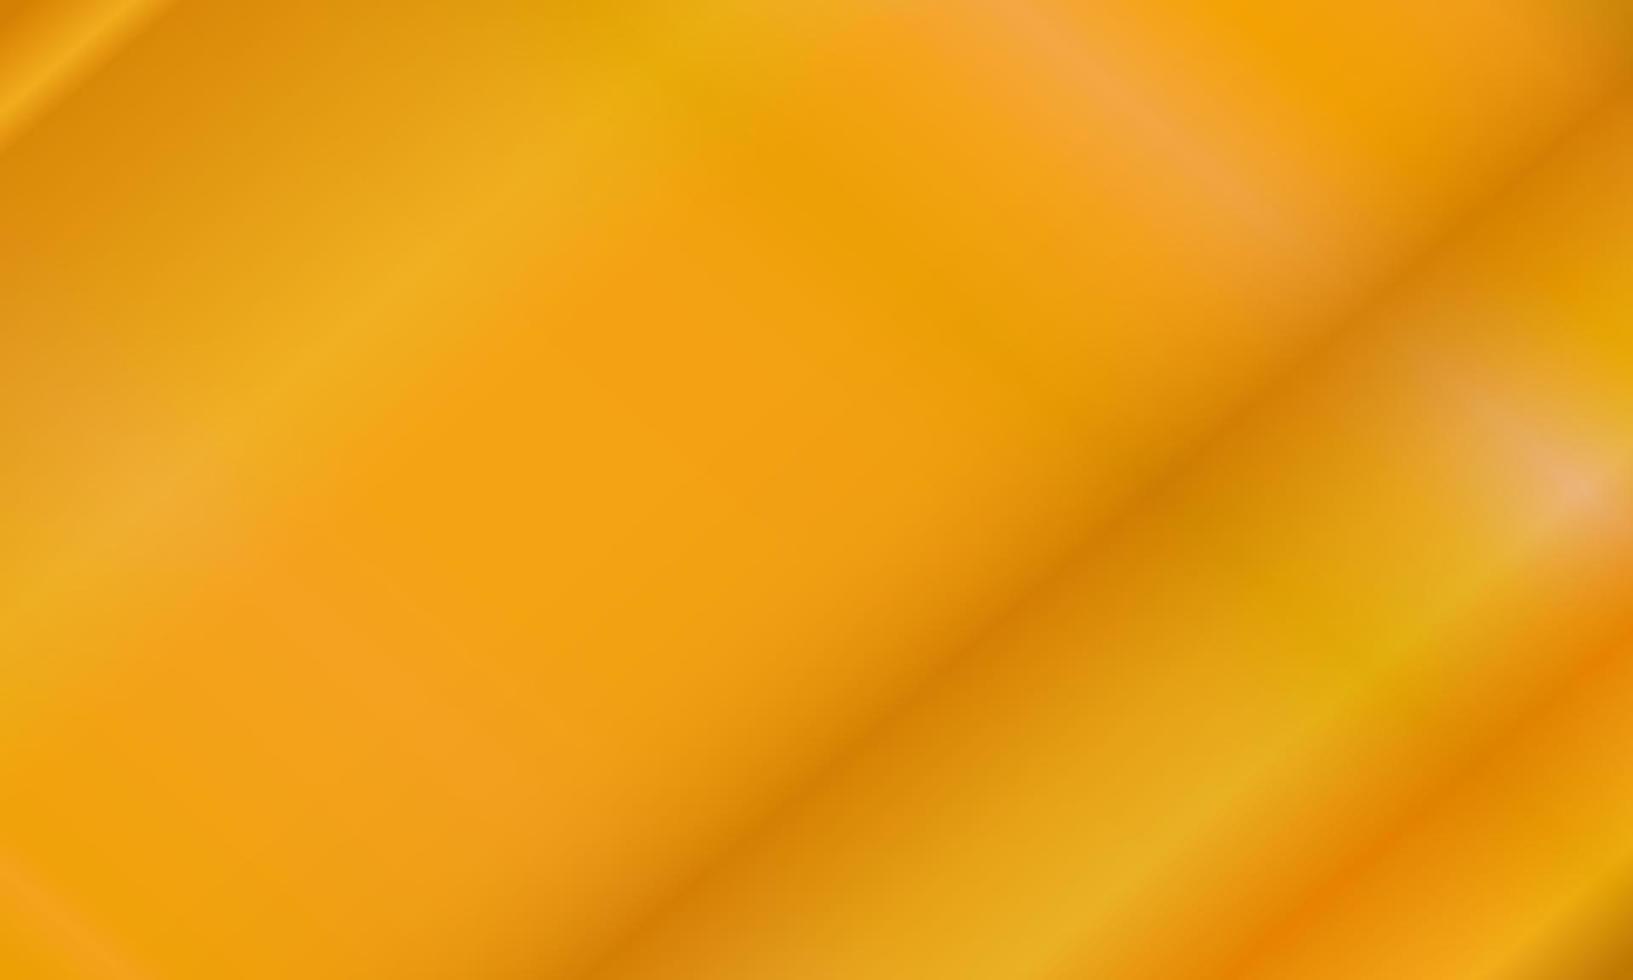 fondo abstracto de neón de luz dorada. estilo brillante, degradado, borroso, moderno y colorido. excelente para fondo, espacio de copia, papel tapiz, tarjeta, portada, afiche, pancarta o volante vector